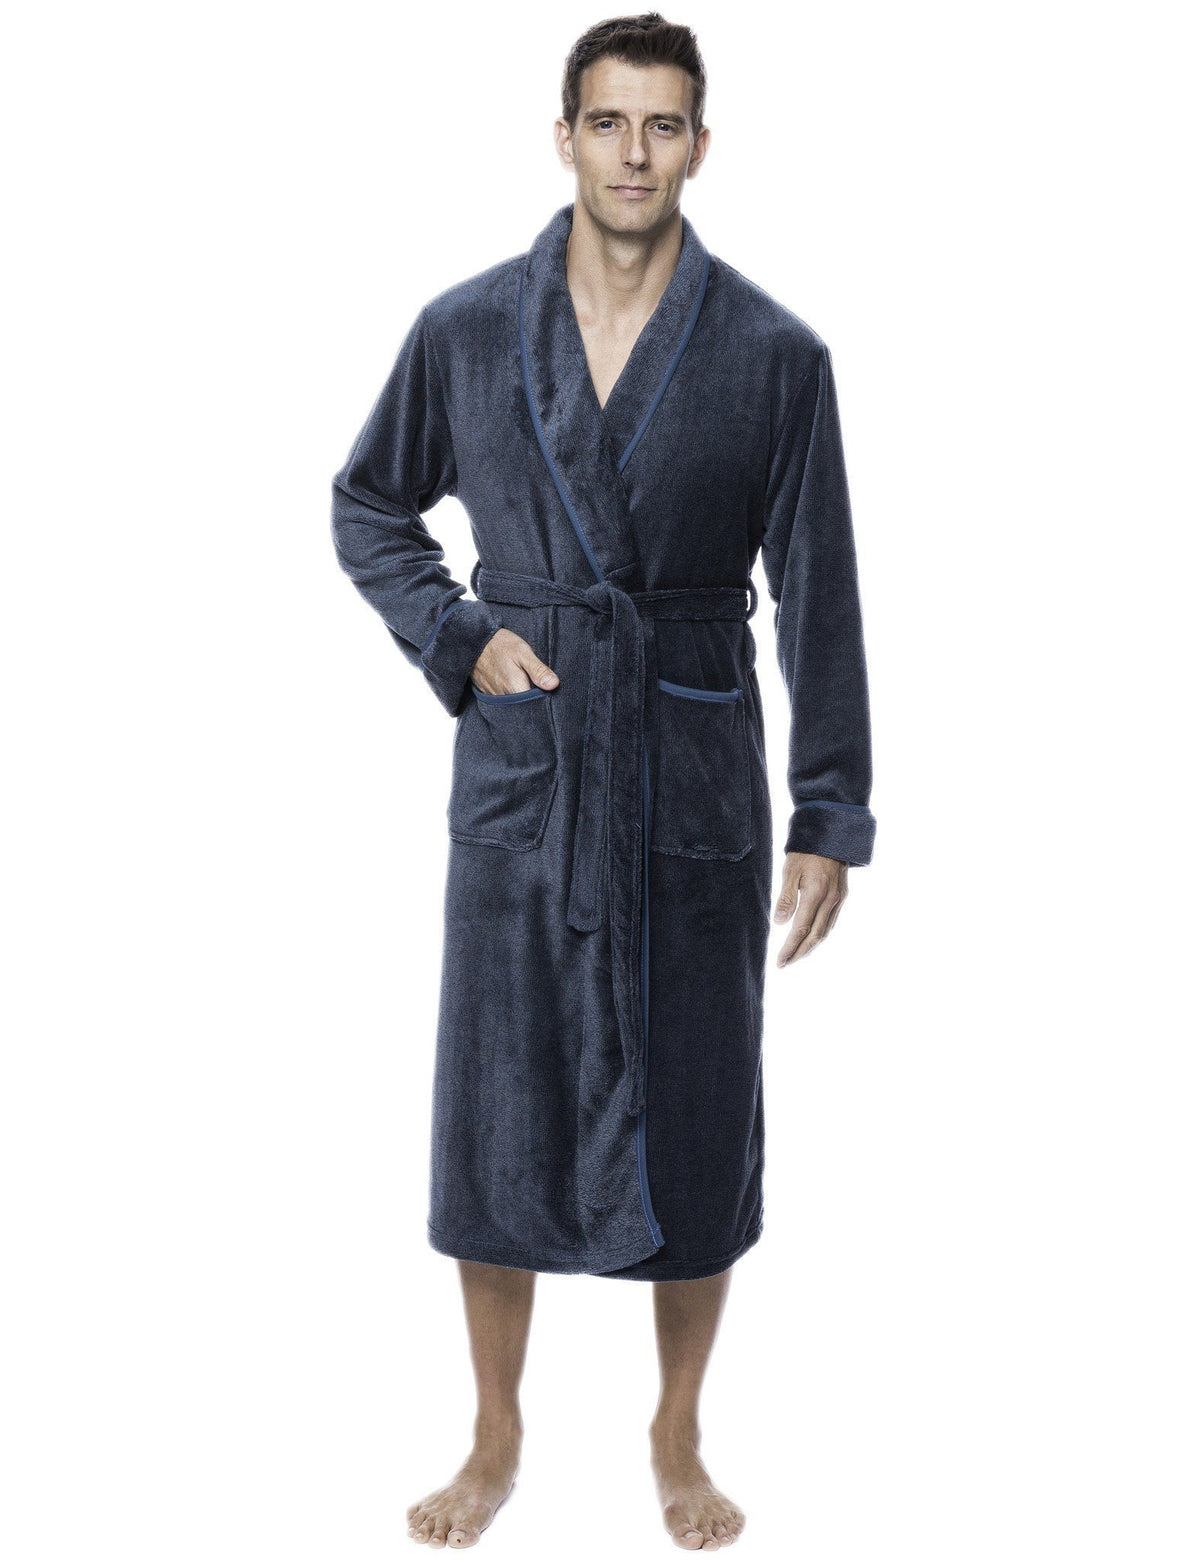 Men's Premium Coral Fleece Plush Spa/Bath Robe - Marl Teal/Grey